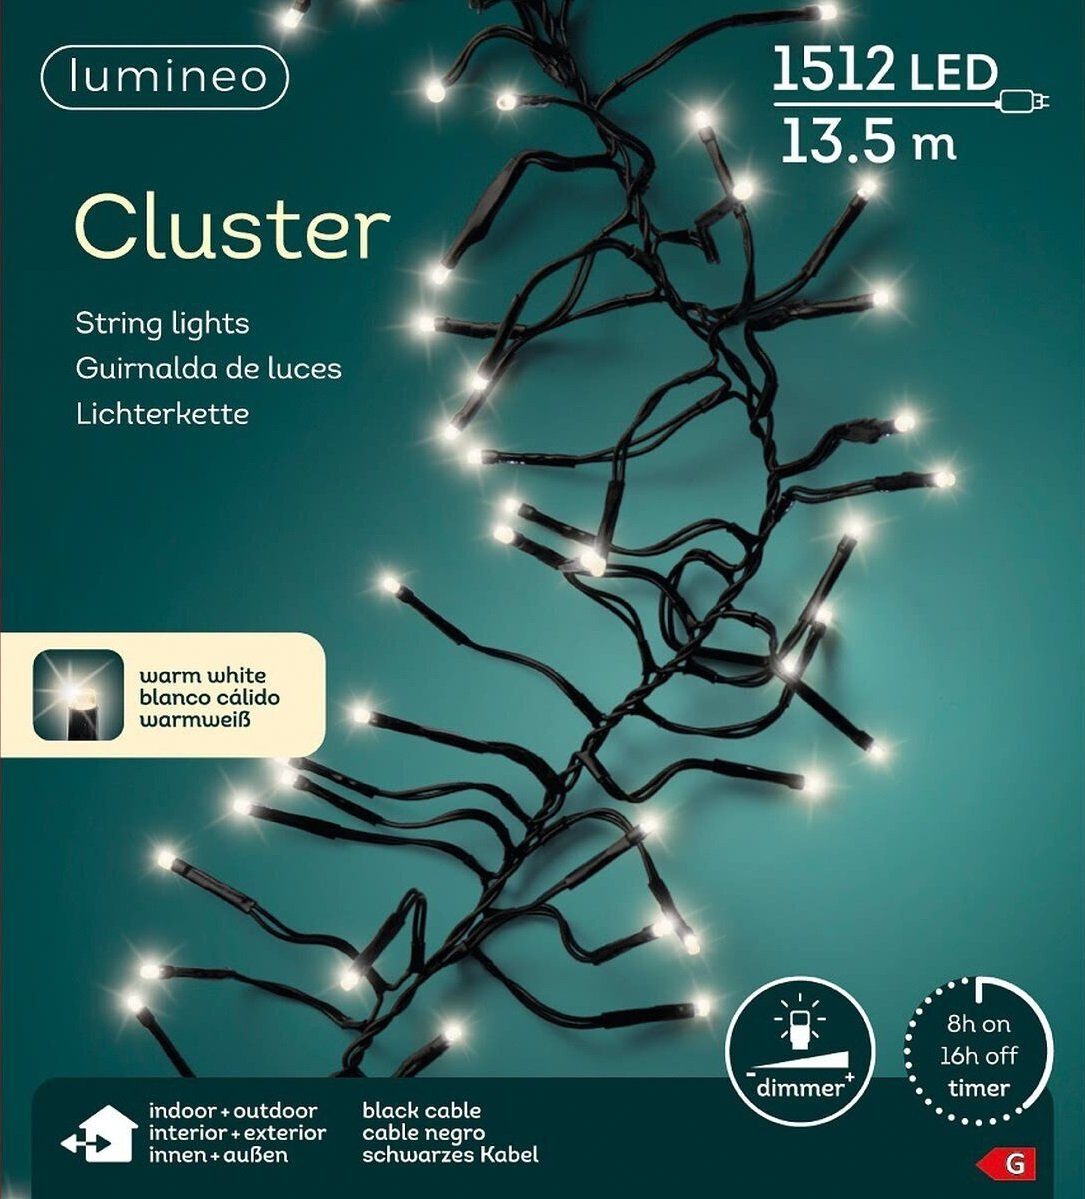 Kaemingk Lumineo LED-Lichterkette Lumineo Lichterkette Cluster 1512 LED 13,5m warm weiß, schwarzes Kabel, Dimmbar, Timer, Indoor, Outdoor